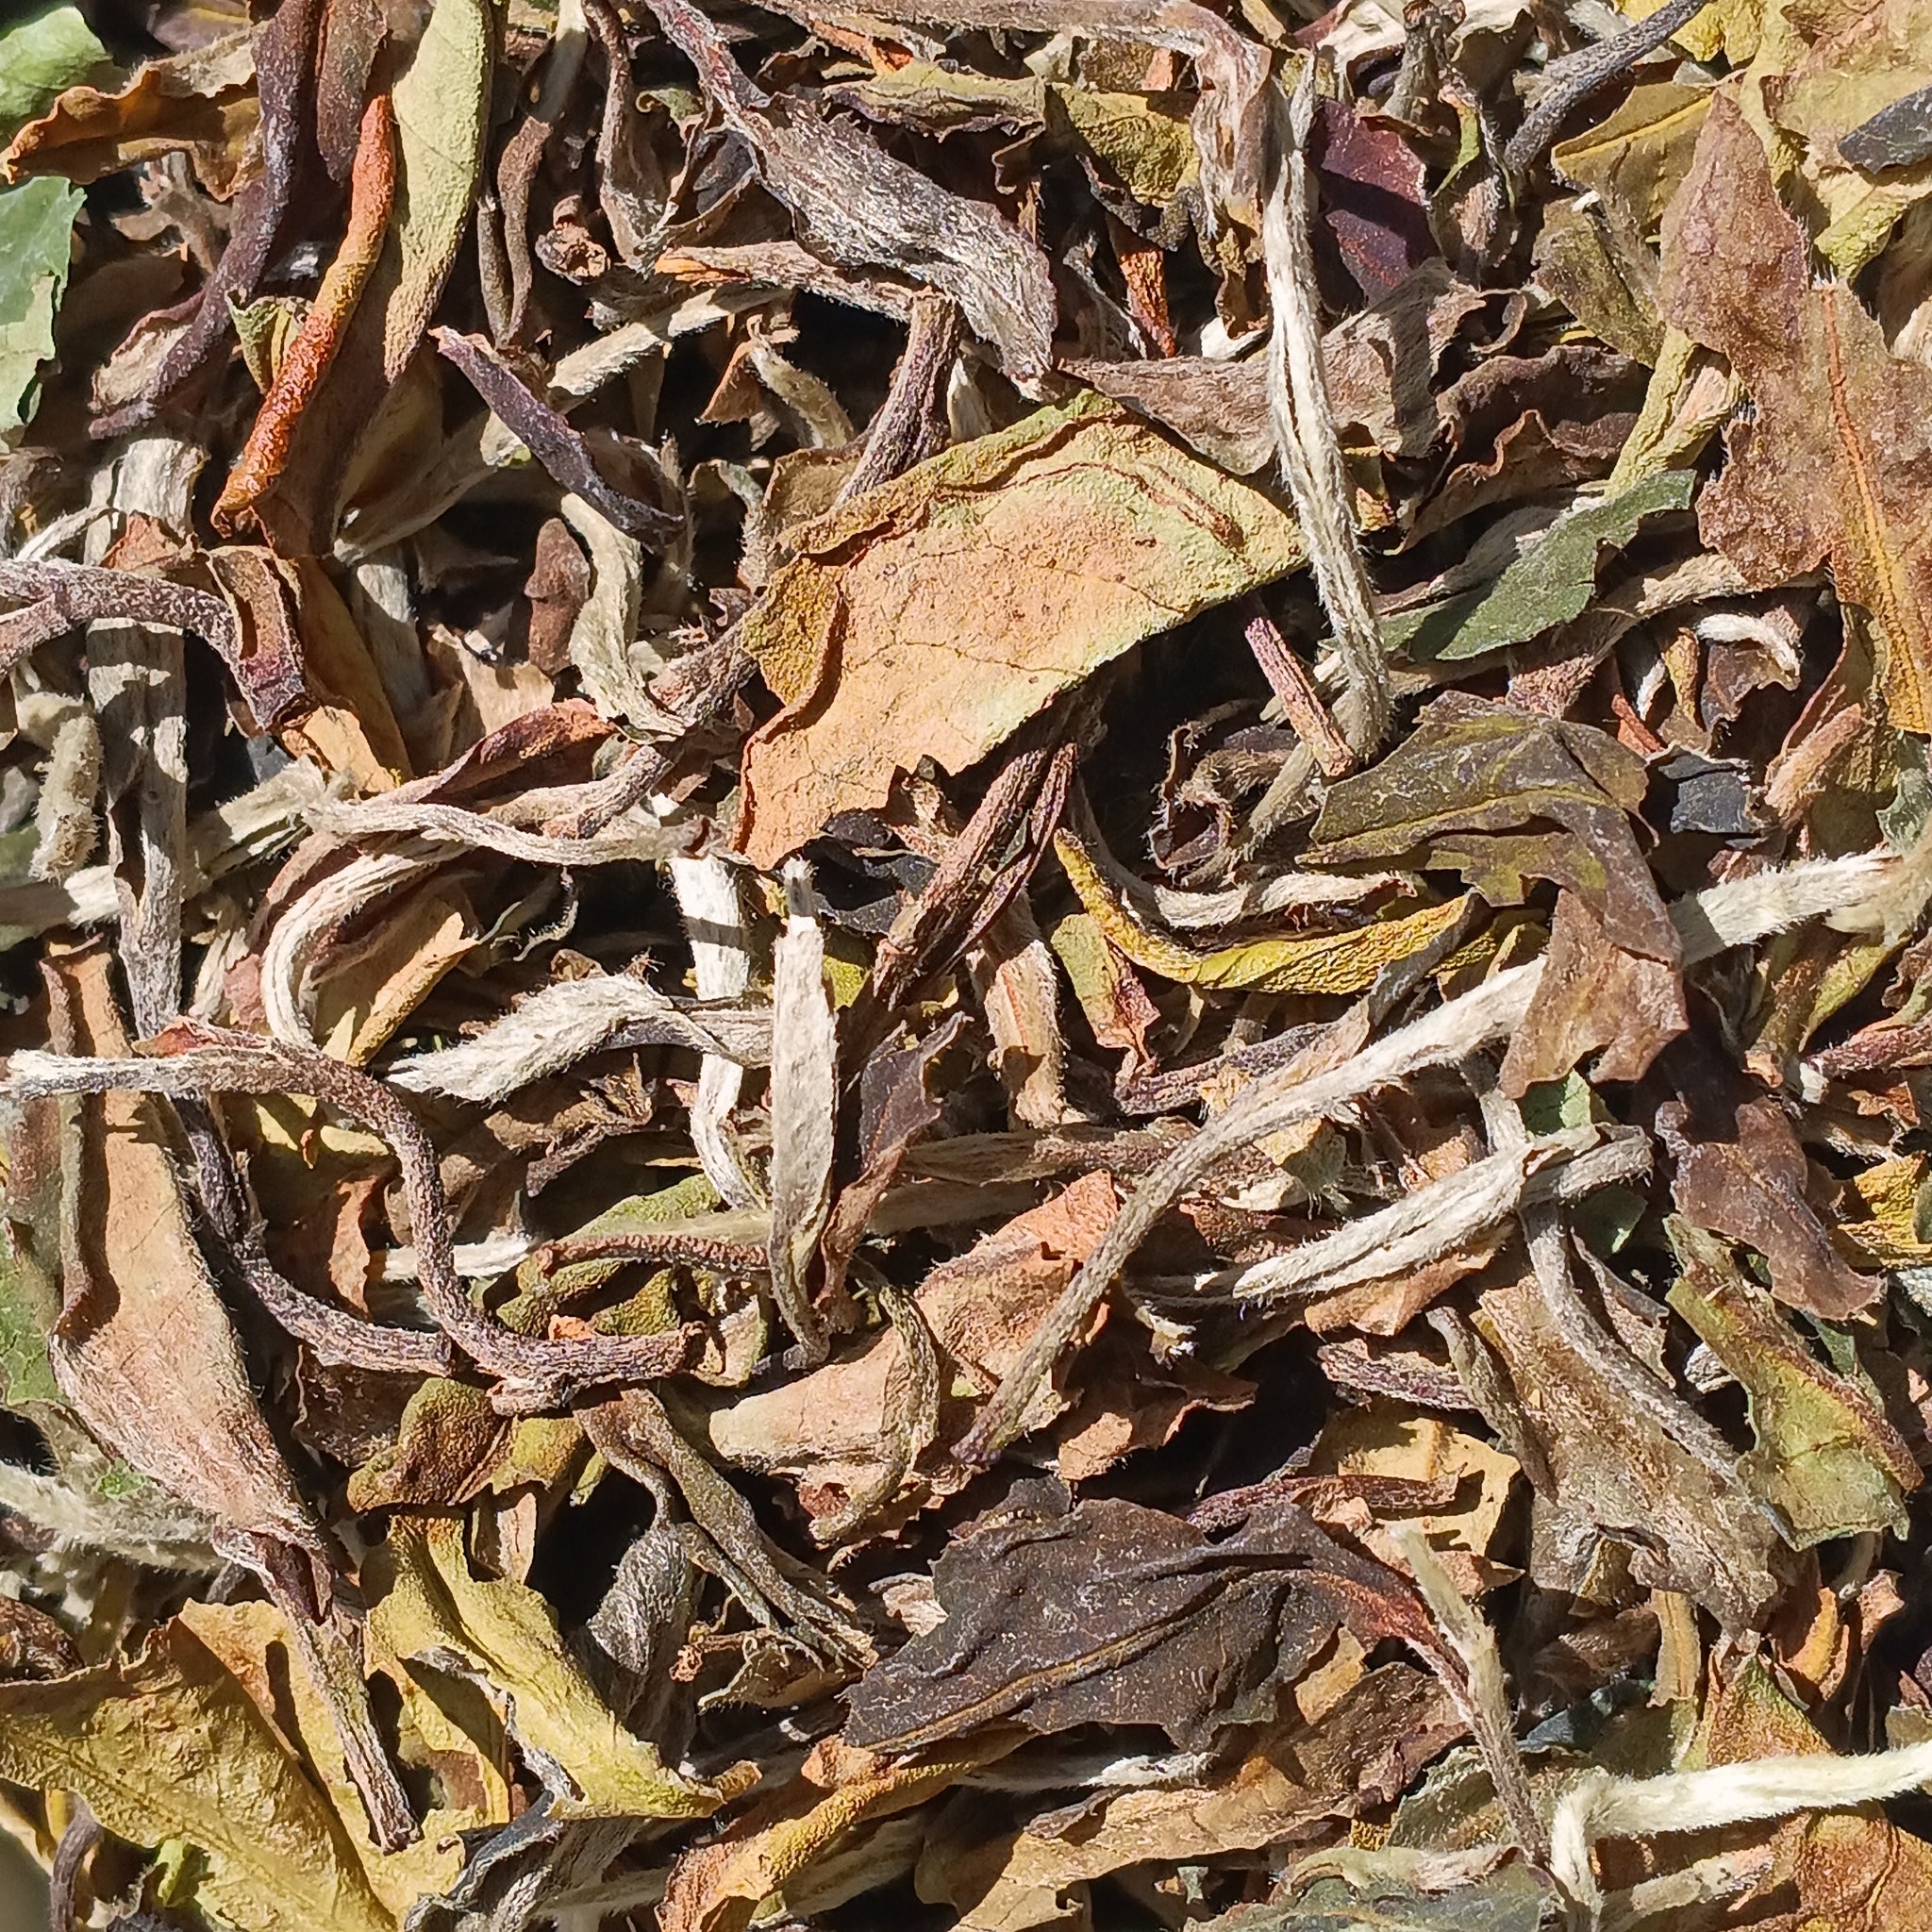 Weißer Tee „Bai Mu Dan“.